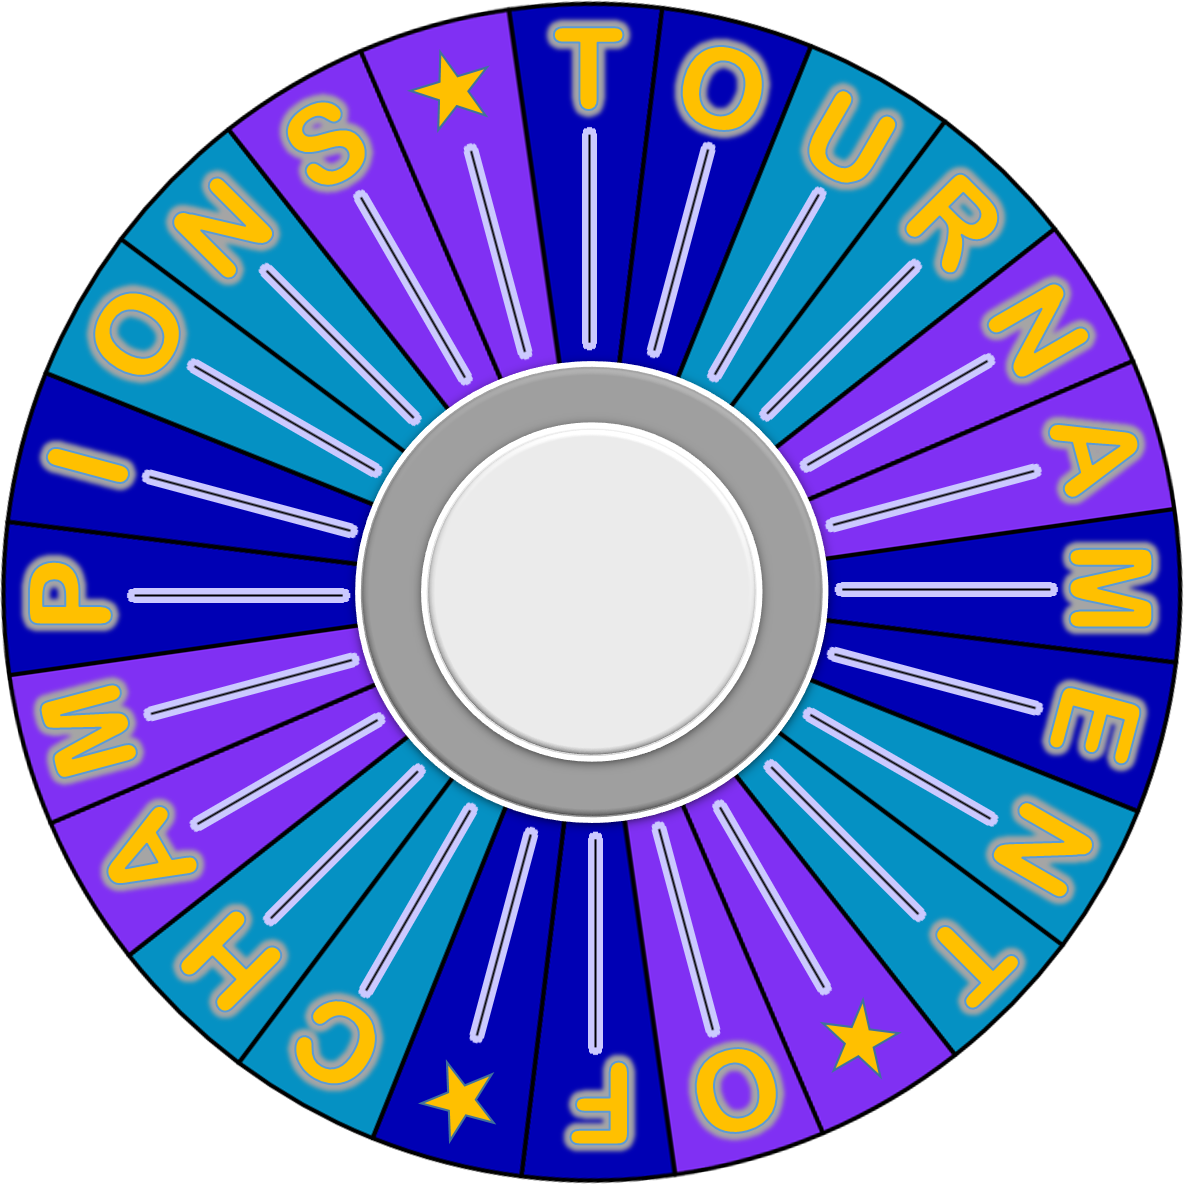 Tournament of Champions Bonus Wheel (FIXED) by LeafMan813 on DeviantArt1184 x 1184